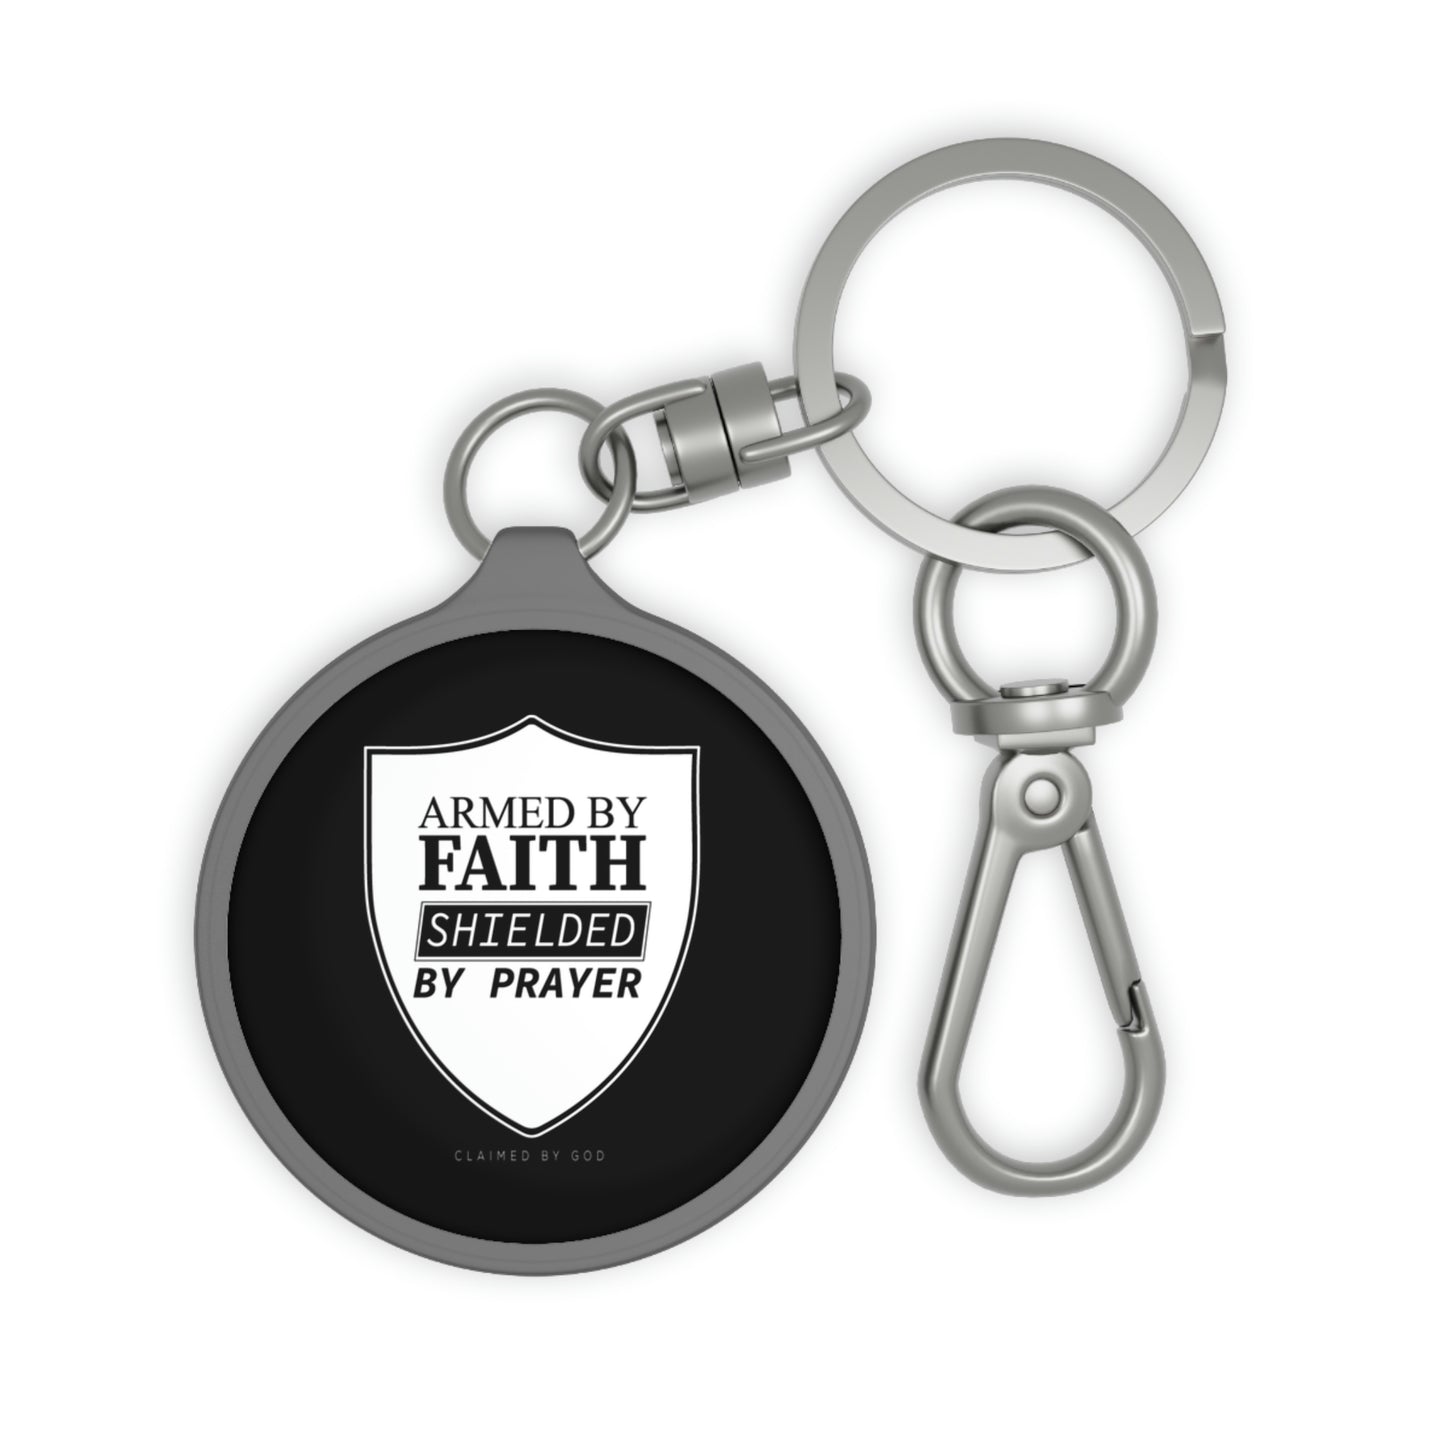 Armed By Faith Shielded By Prayer Key Fob